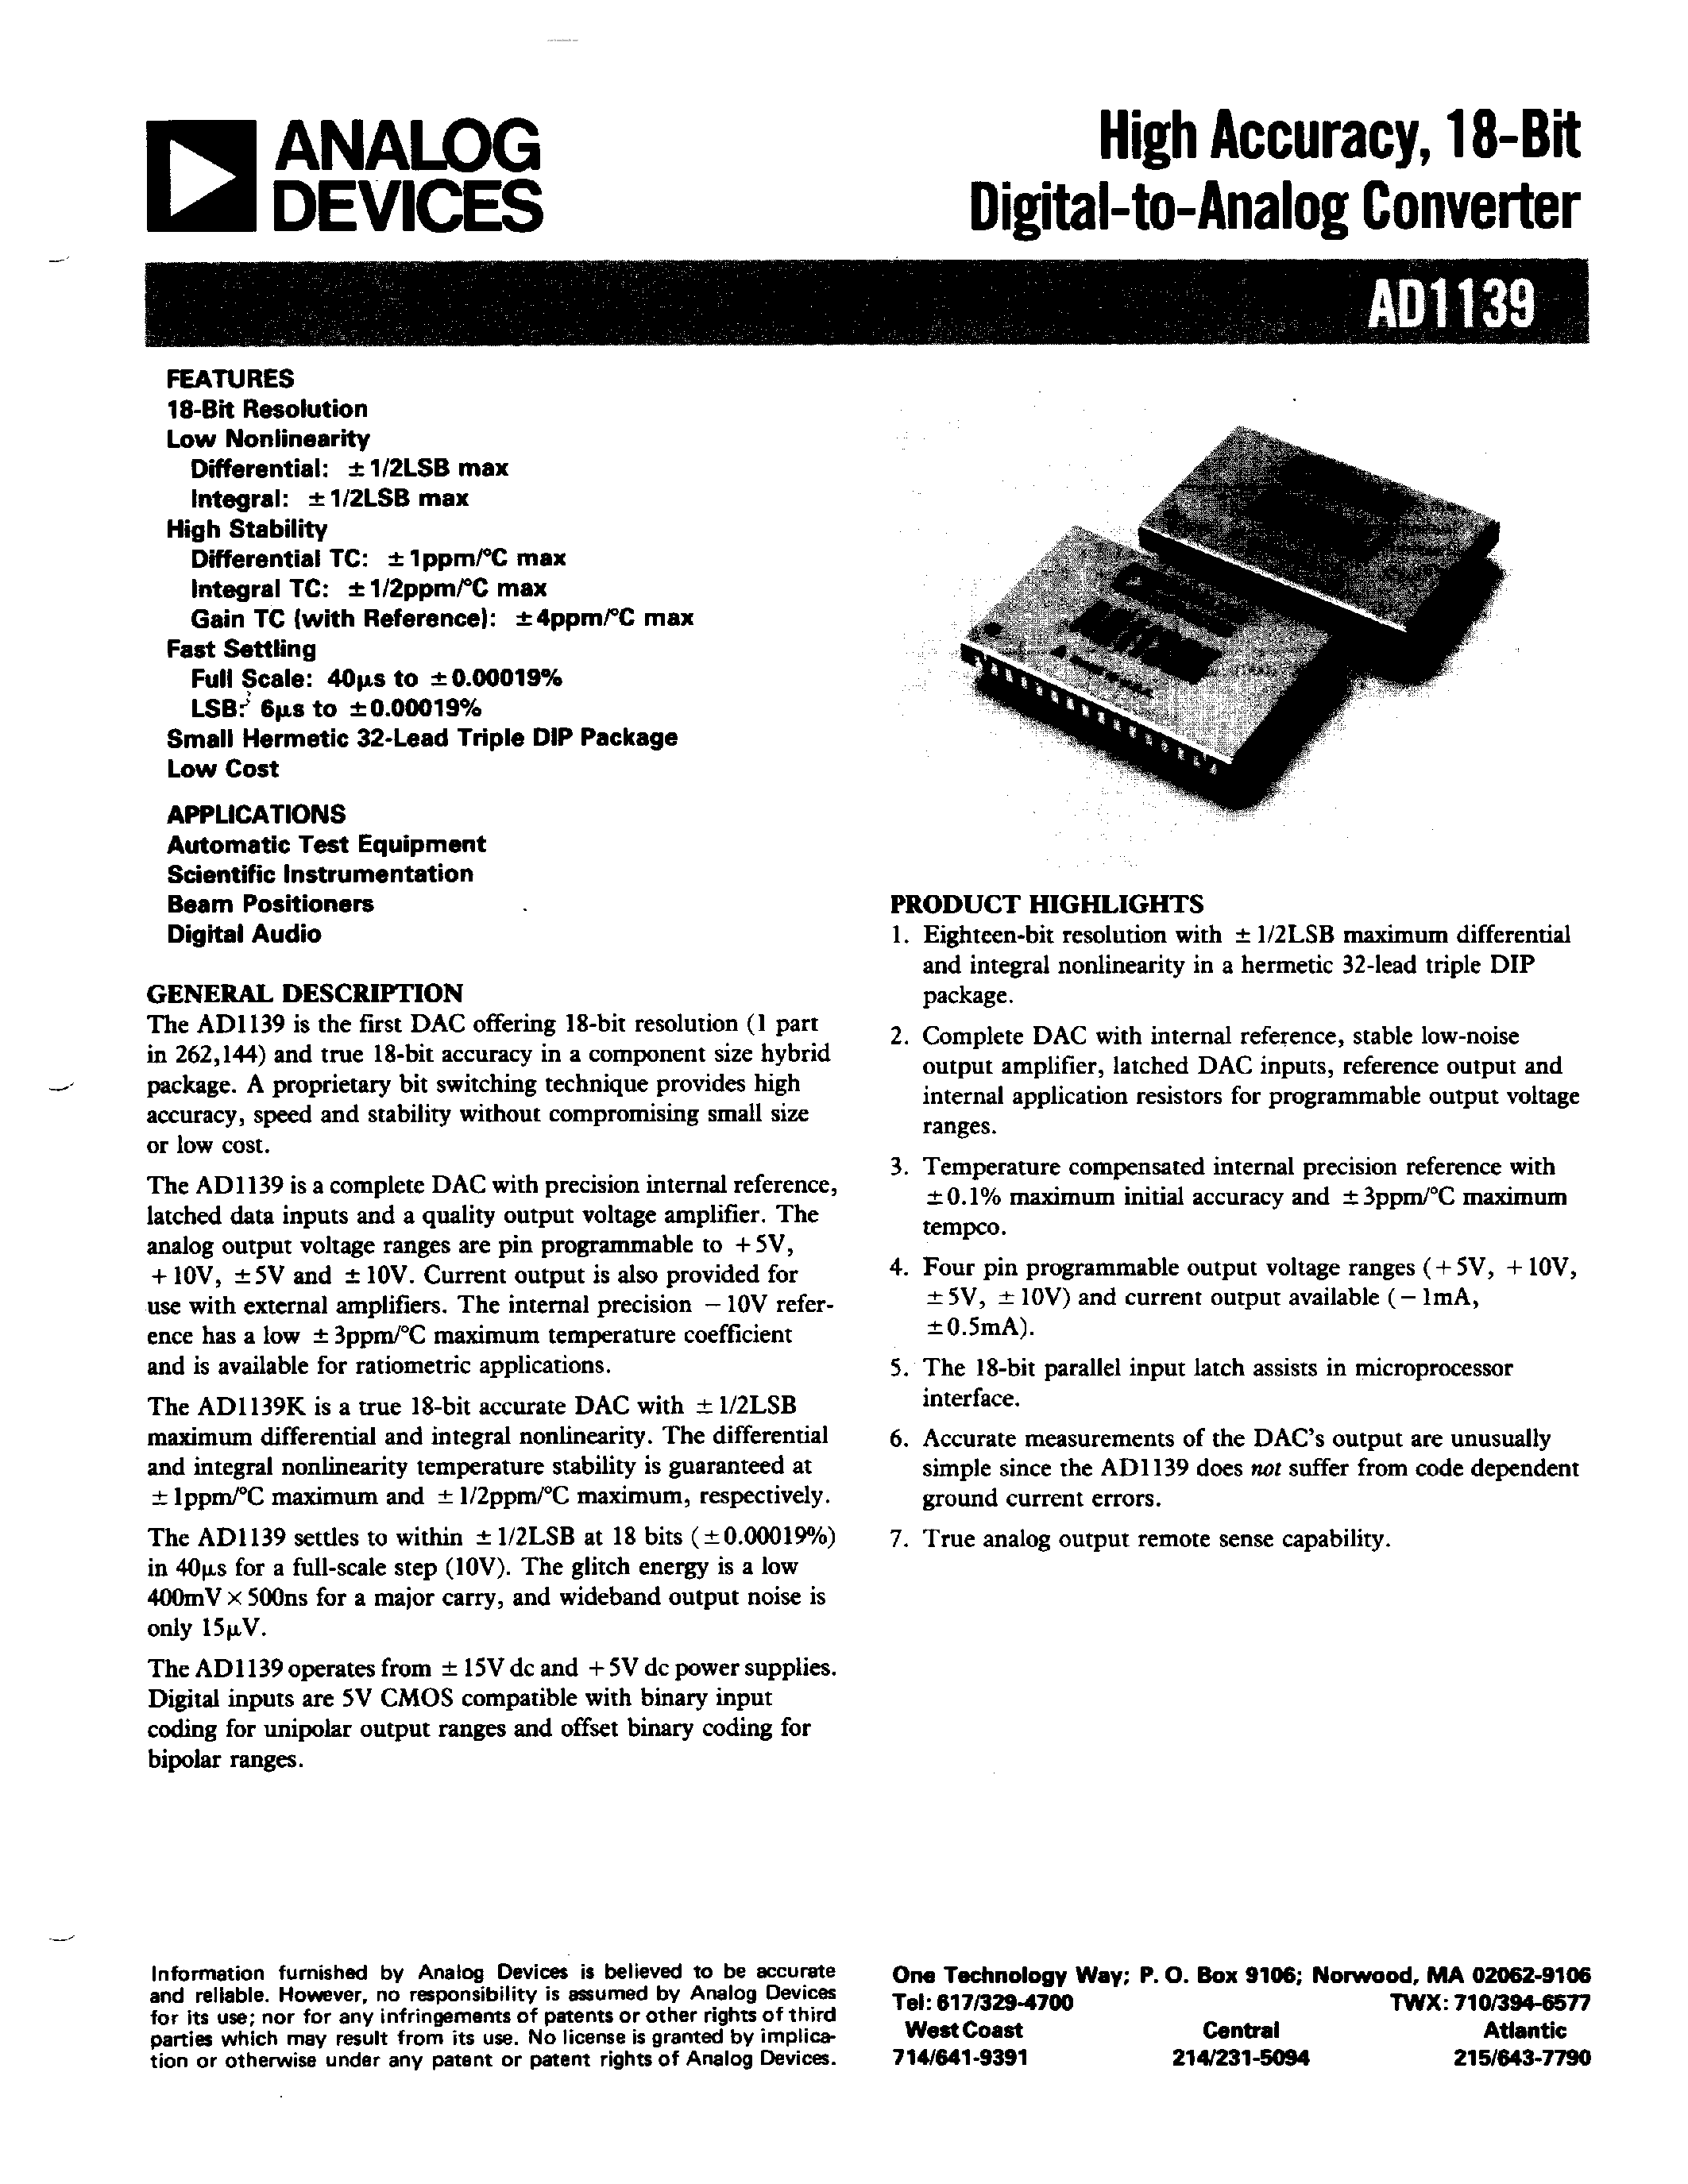 Datasheet AD1139 - High Accuracy 18-Bit Digital-to-Analog Converter page 1